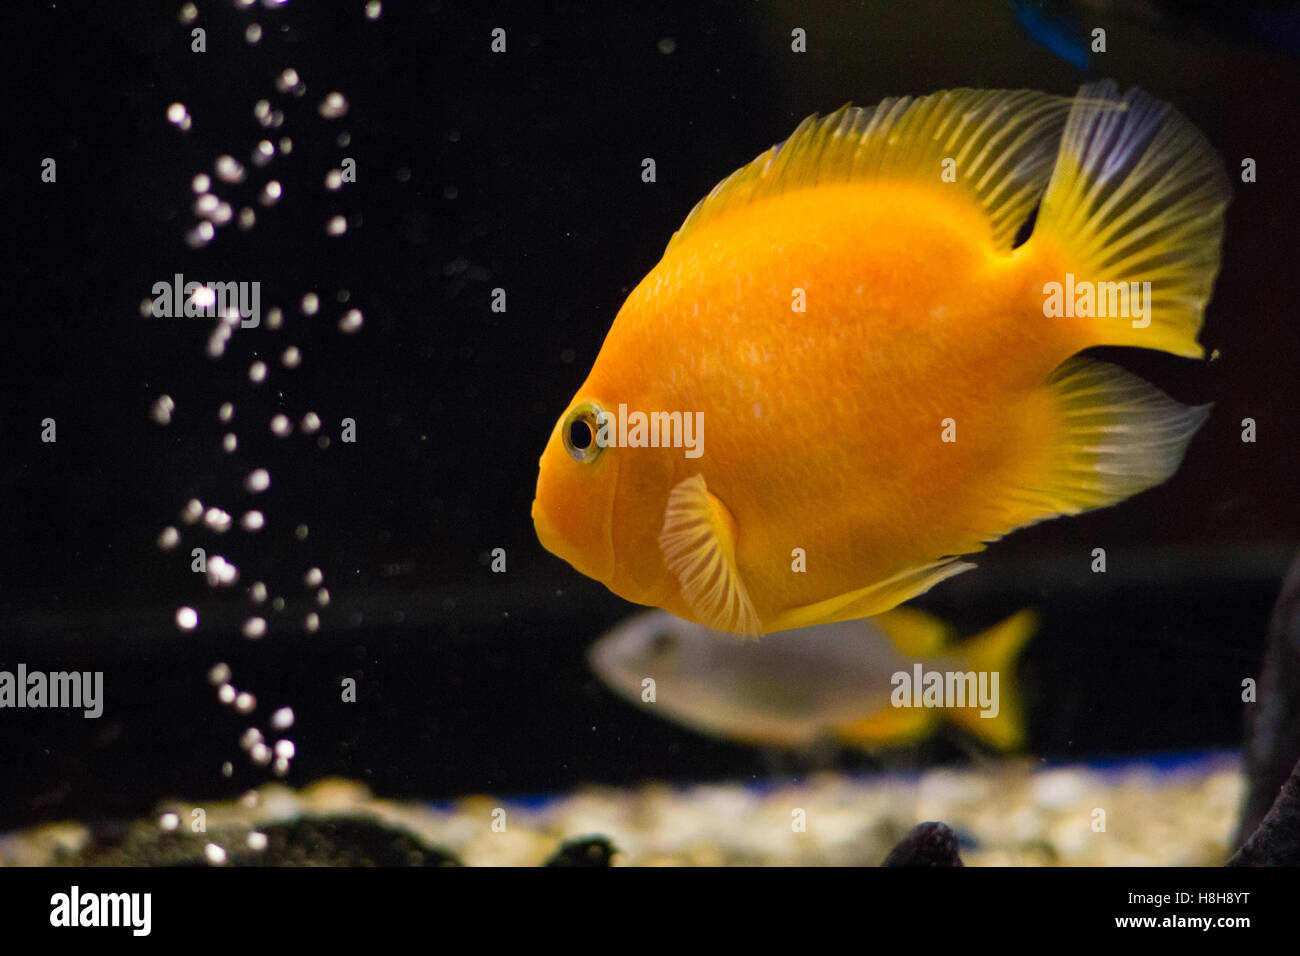 Yellow cichlid aquarium fish swimming Stock Photo